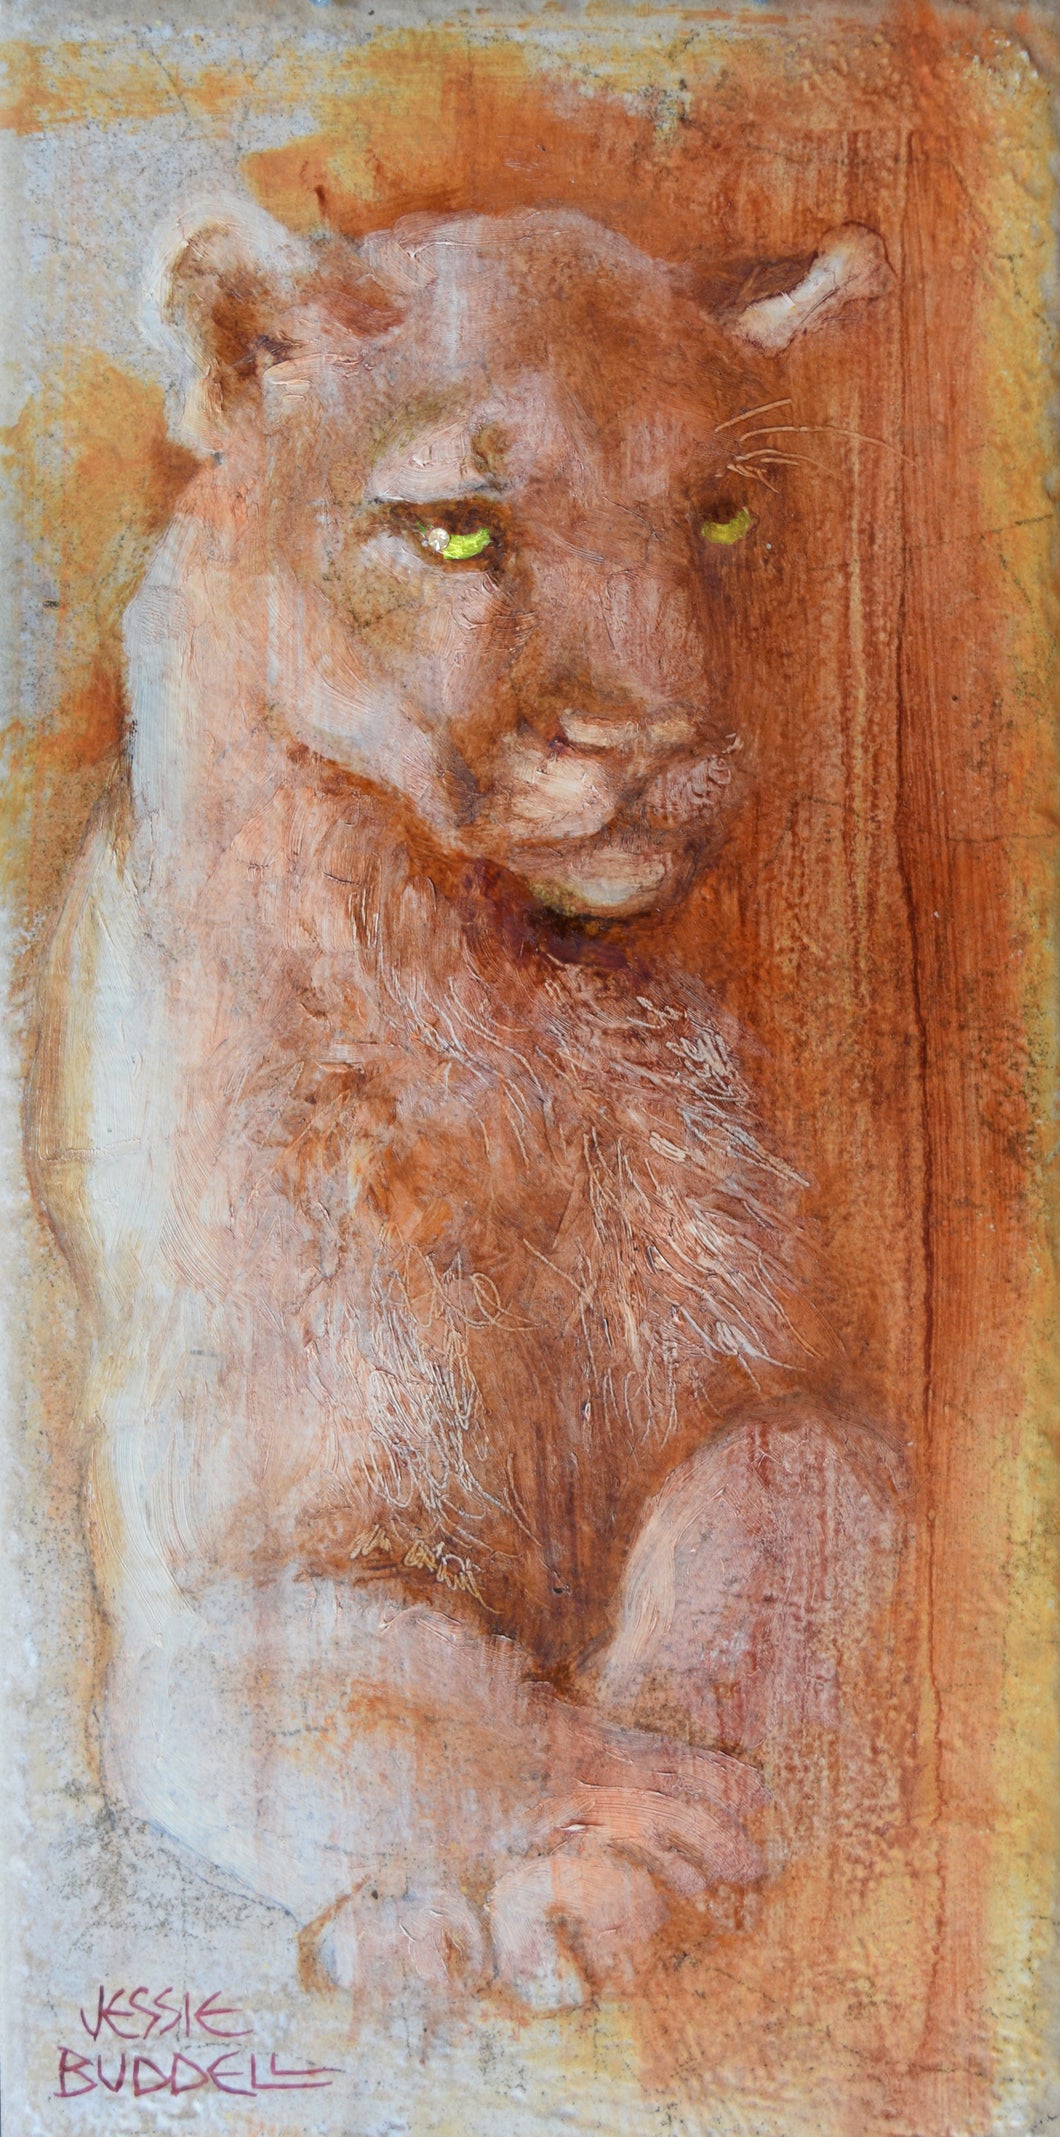 Cougar - Acrylic on Tile